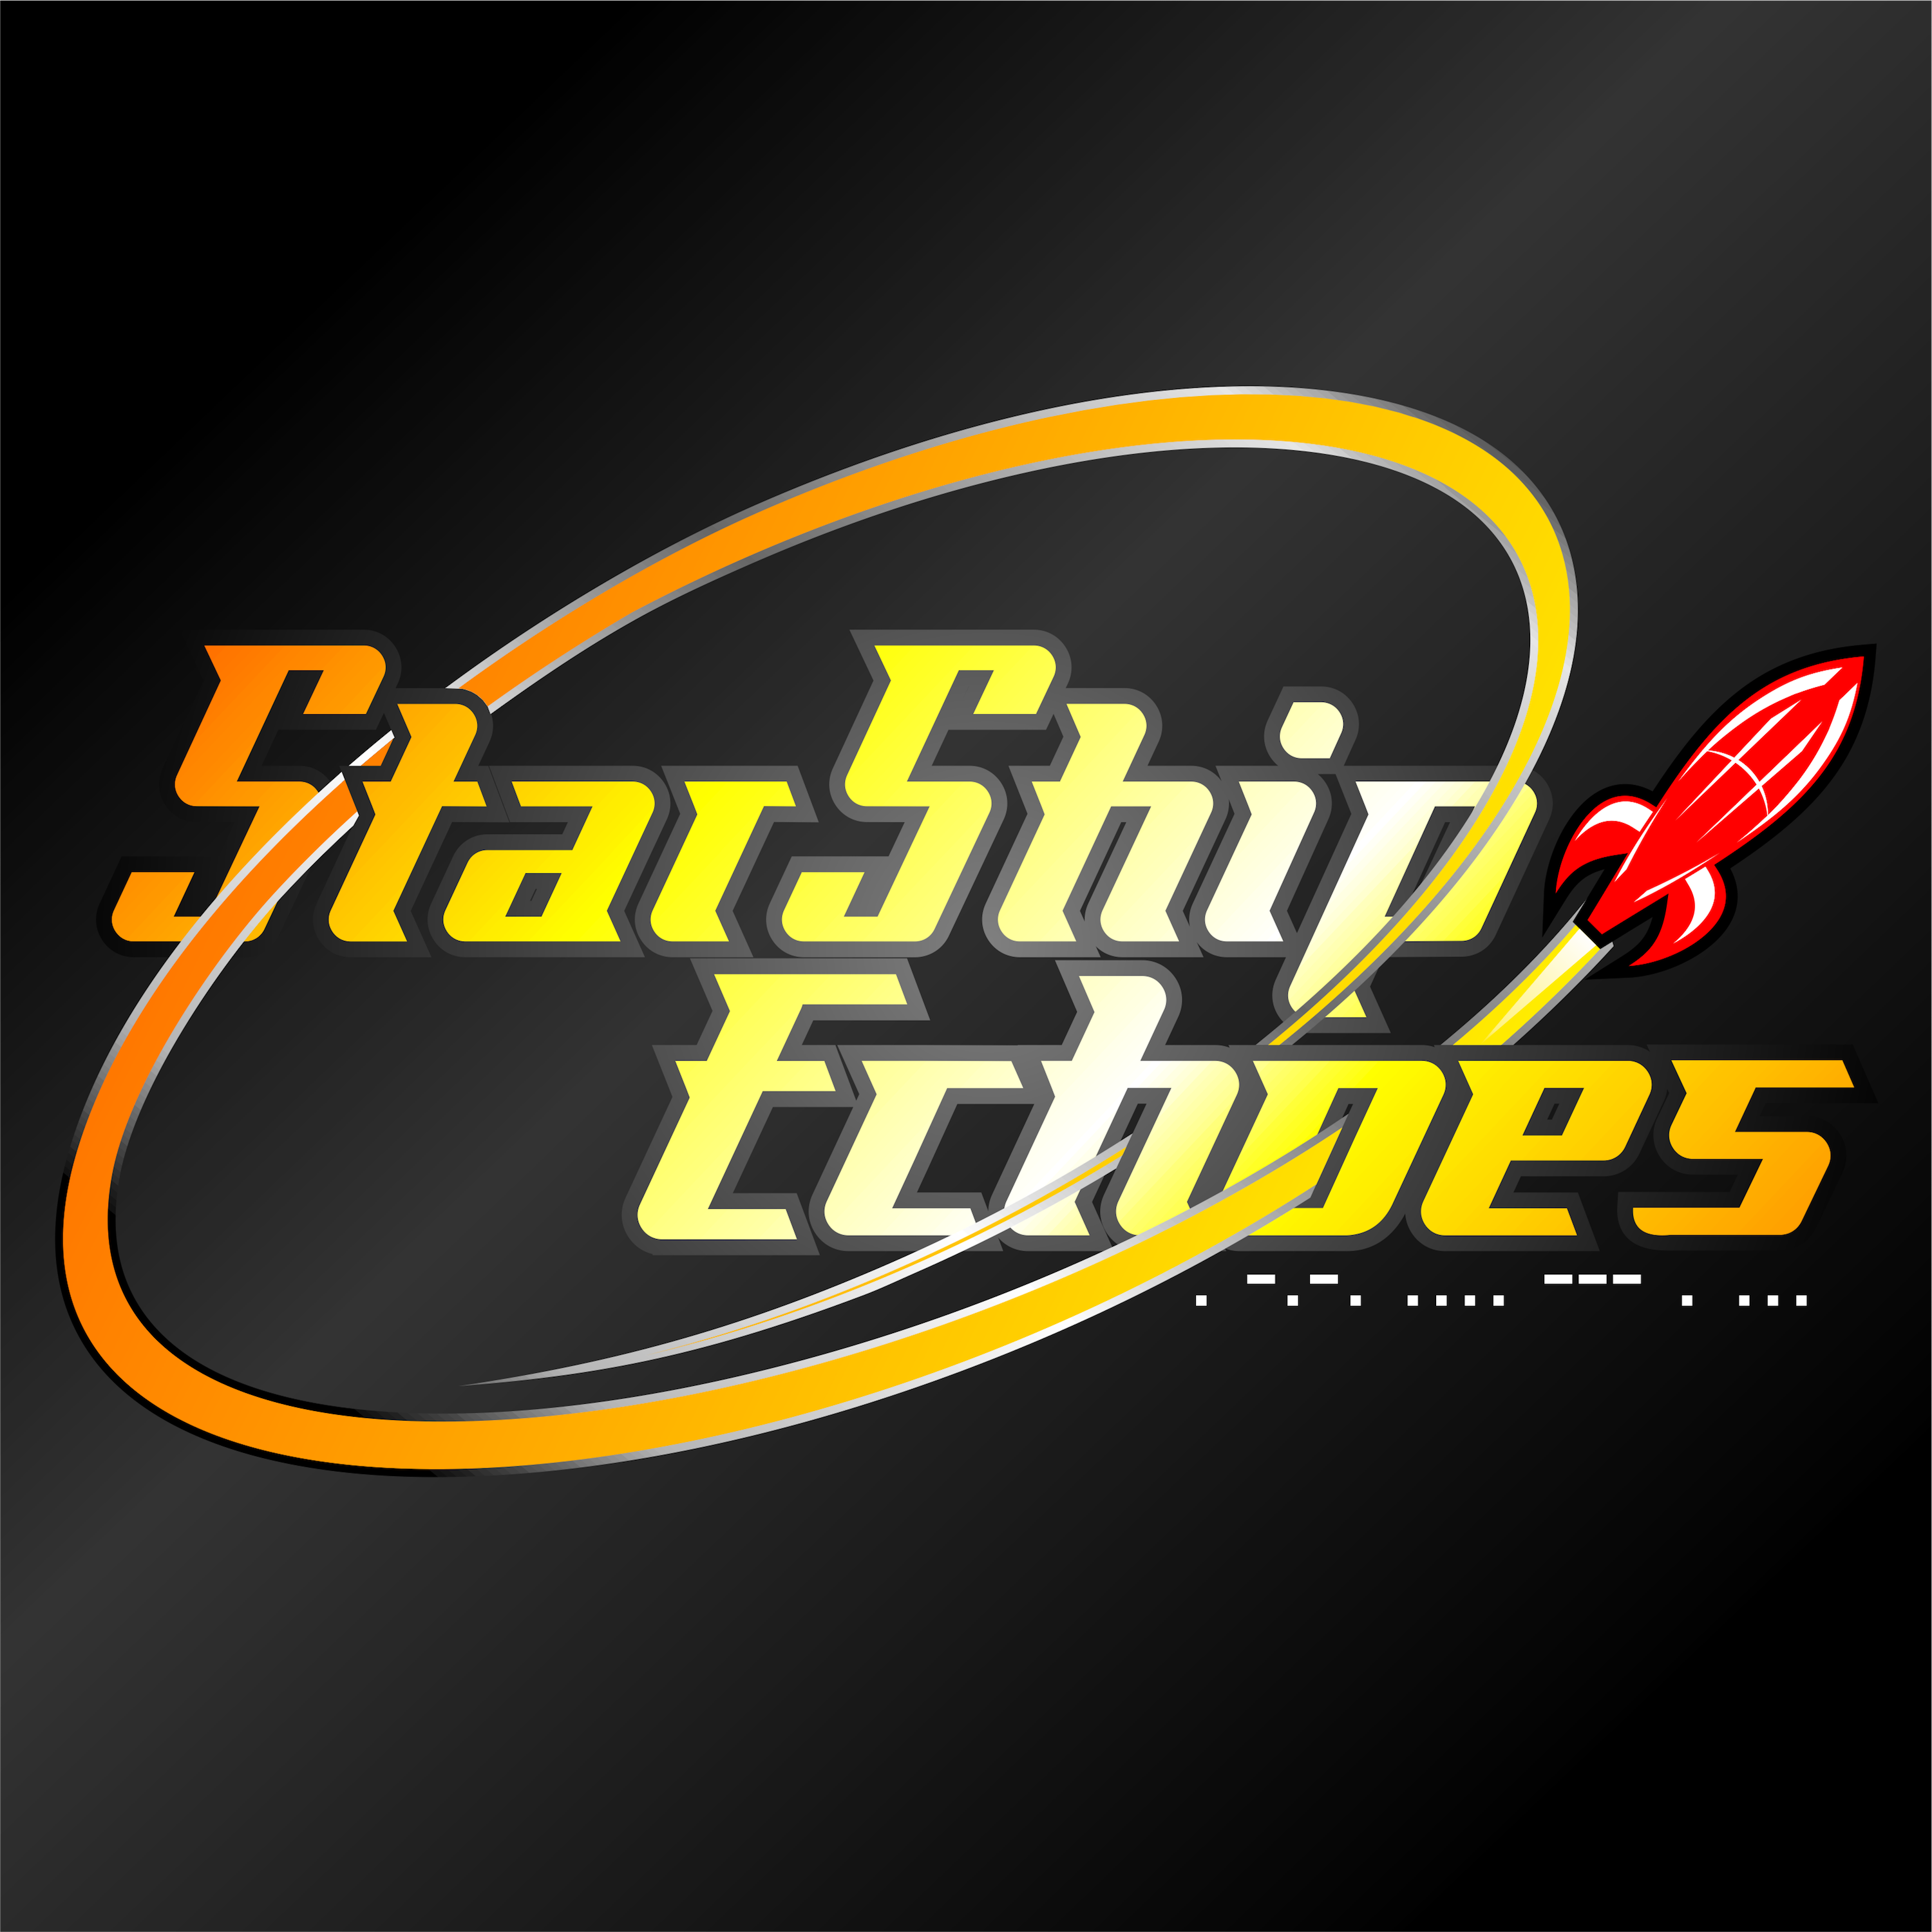 cover art for StarShipEchoes 2007 StarShipSofa Originals Harlan Ellison